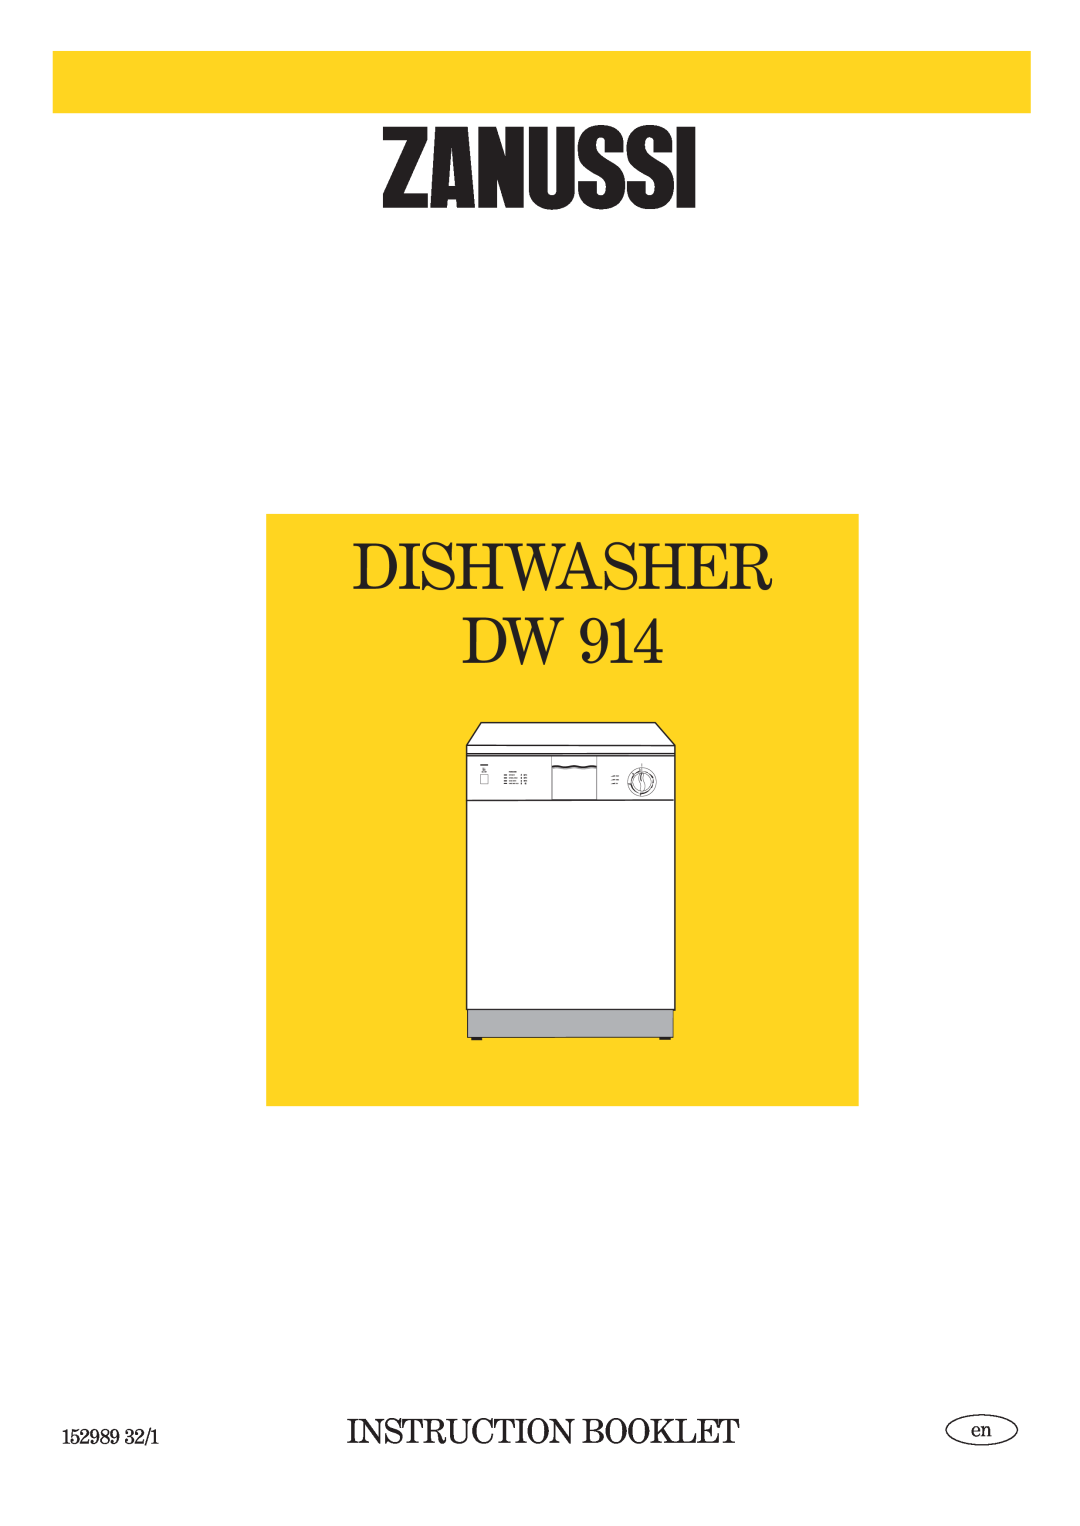 Zanussi DW 914 manual Dishwasher Dw, Instruction Booklet, 152989 32/1 